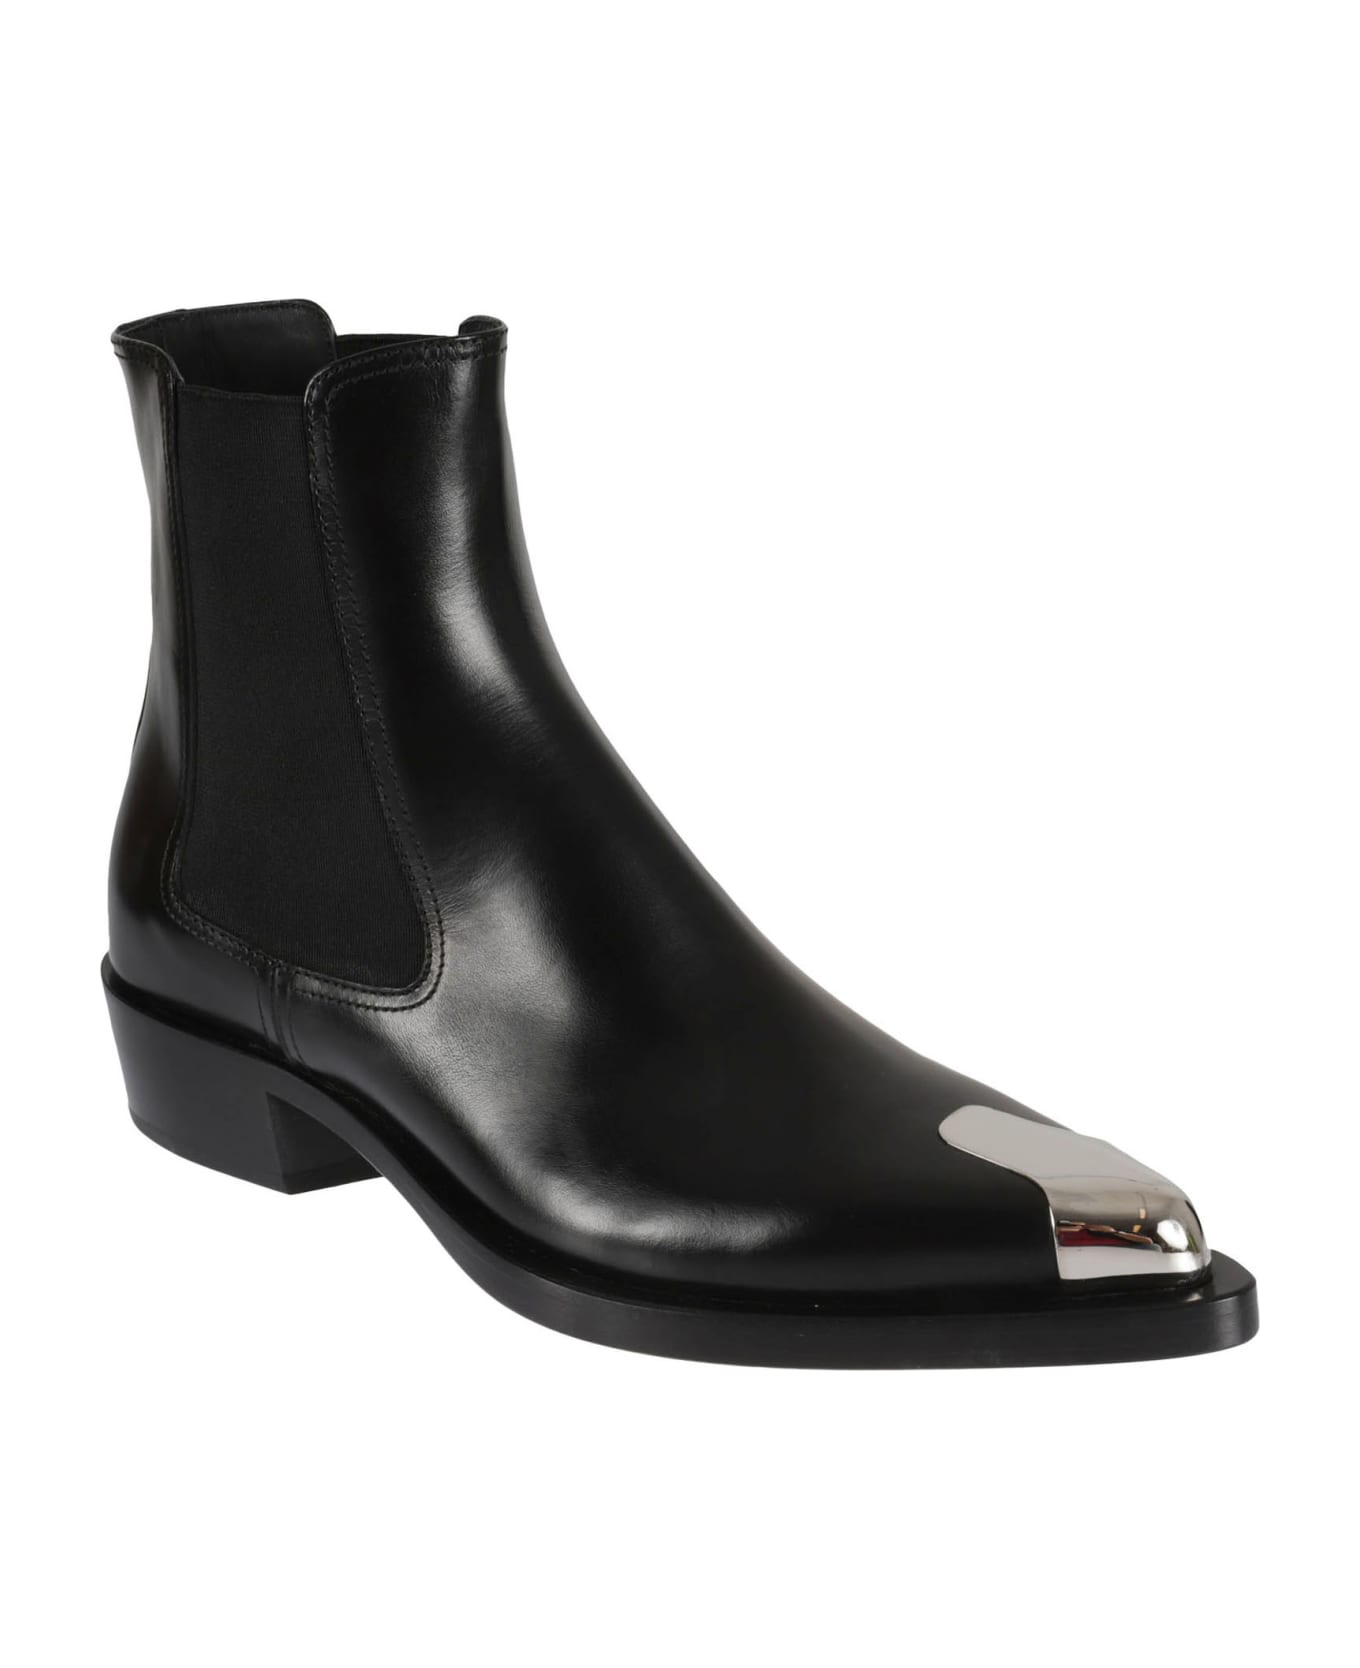 Alexander McQueen Metallic Toe Boots - Black/Silver